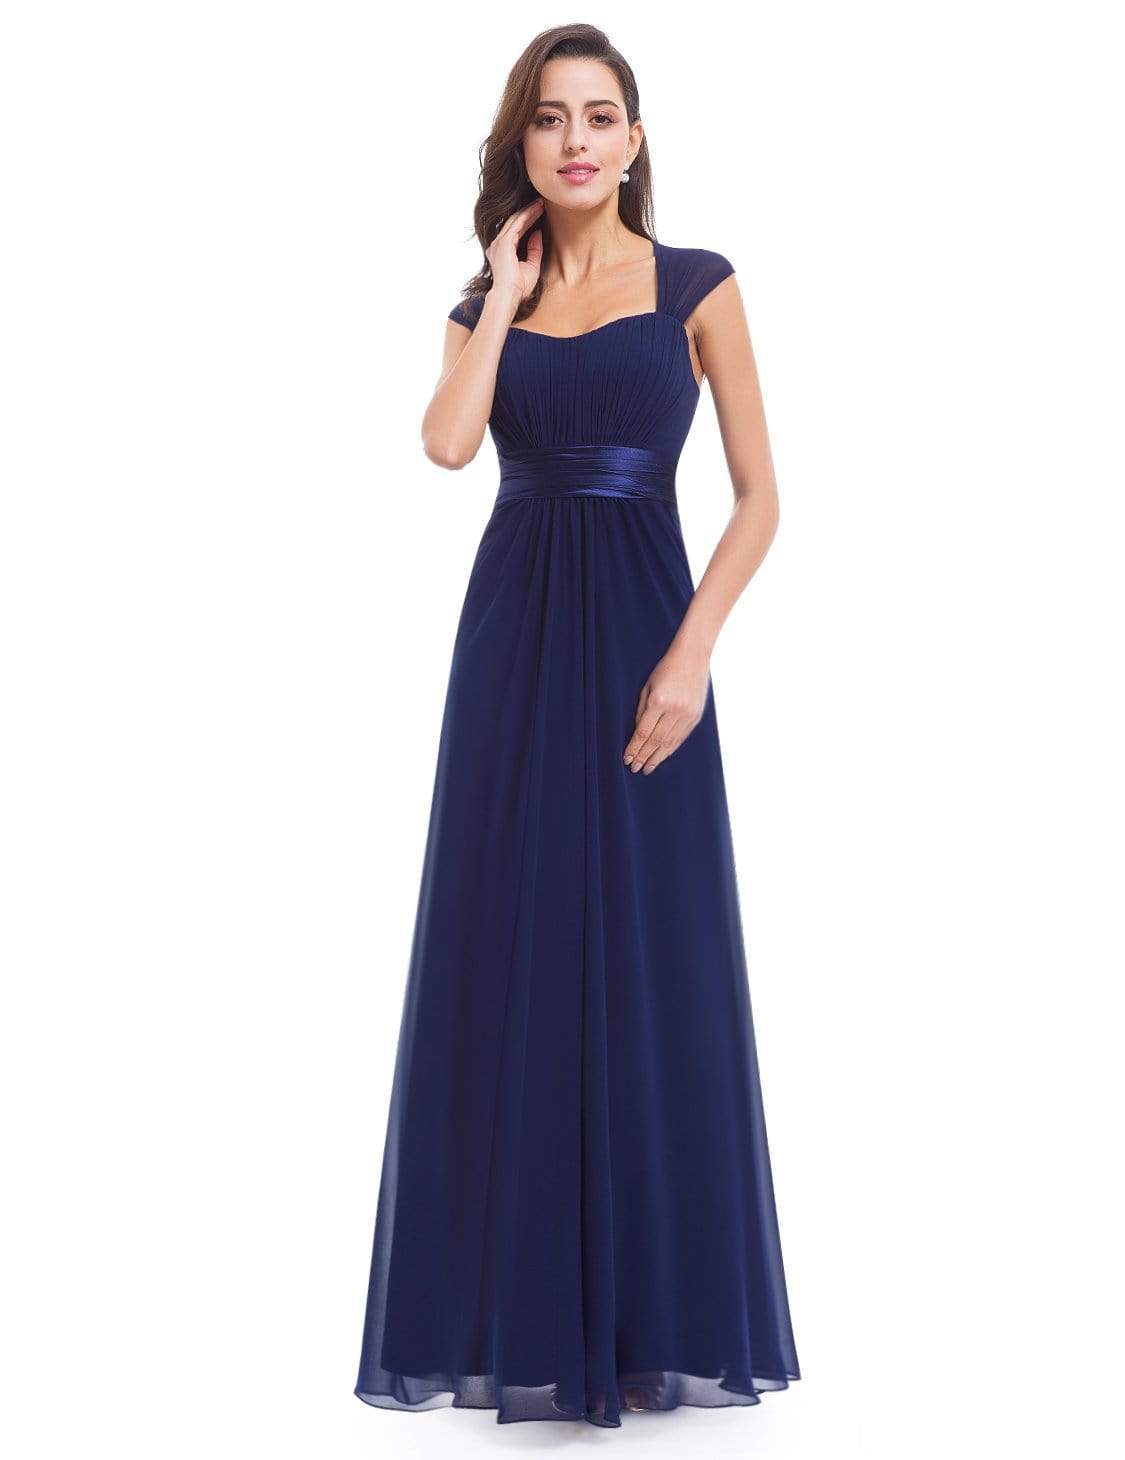 Sleeveless Floor Length Evening Dress with Empire Waist - Ever-Pretty US